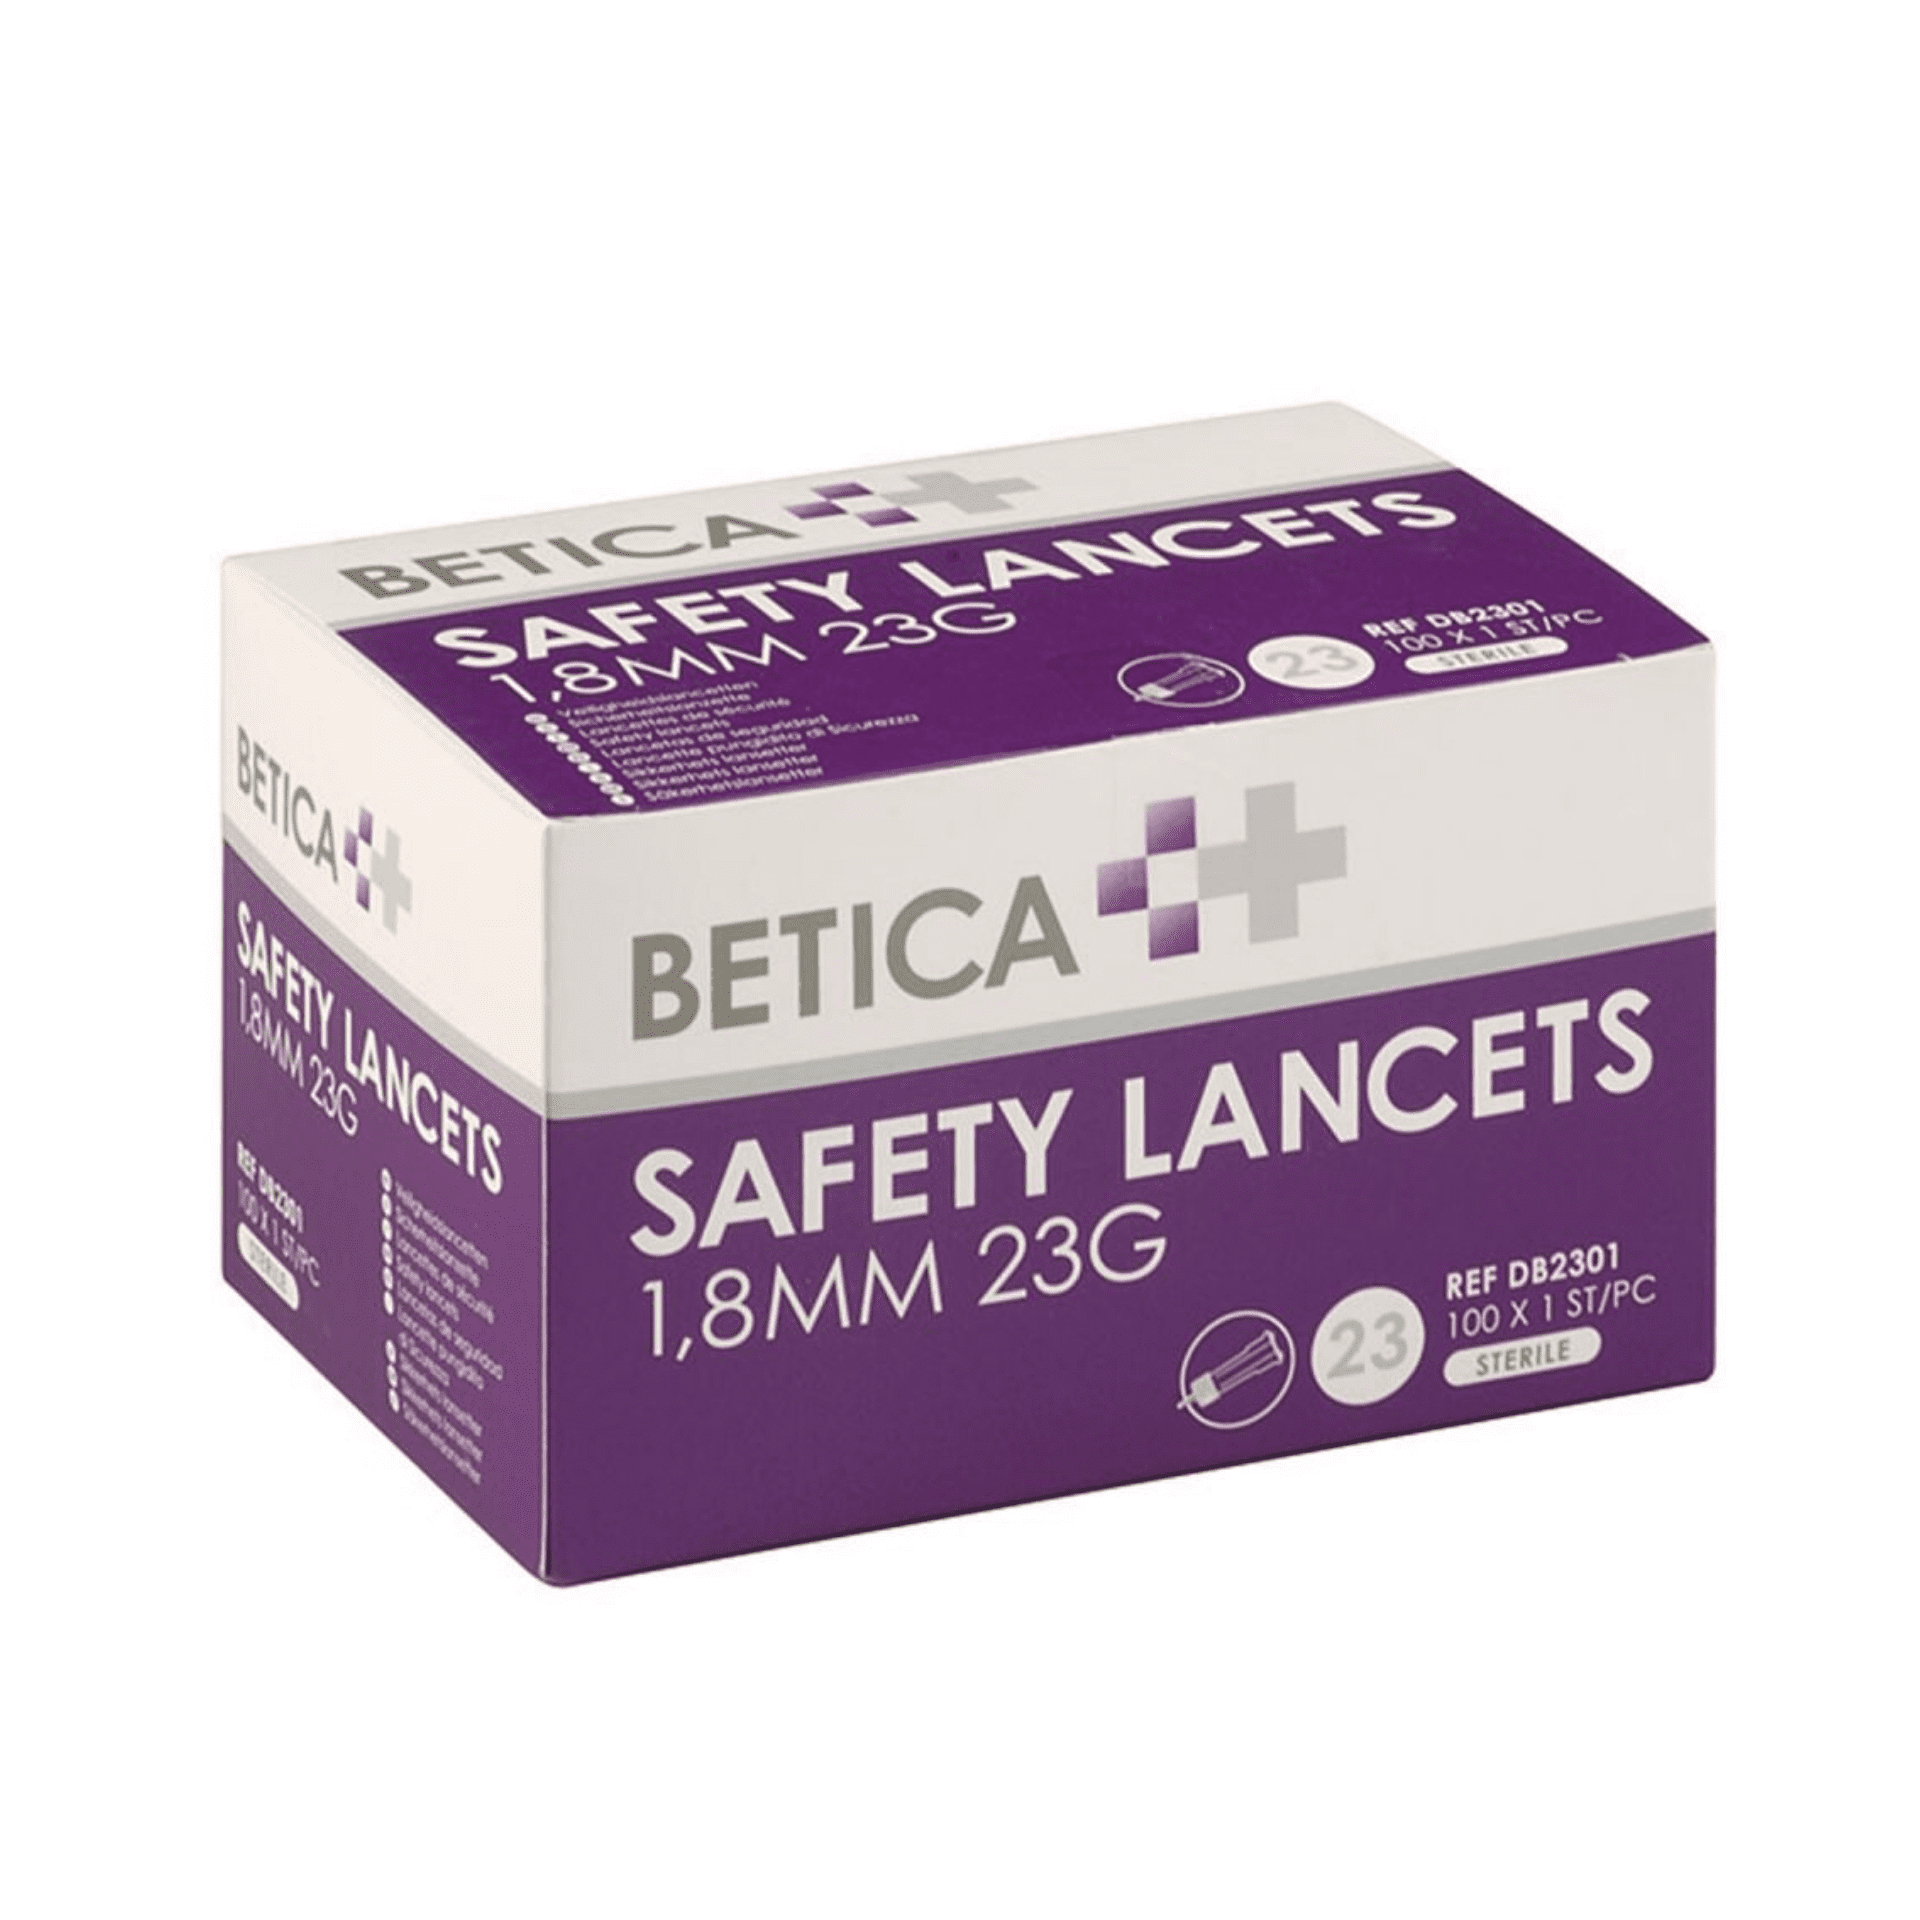 Betica Safety Lancet 1,8mm 23g 100